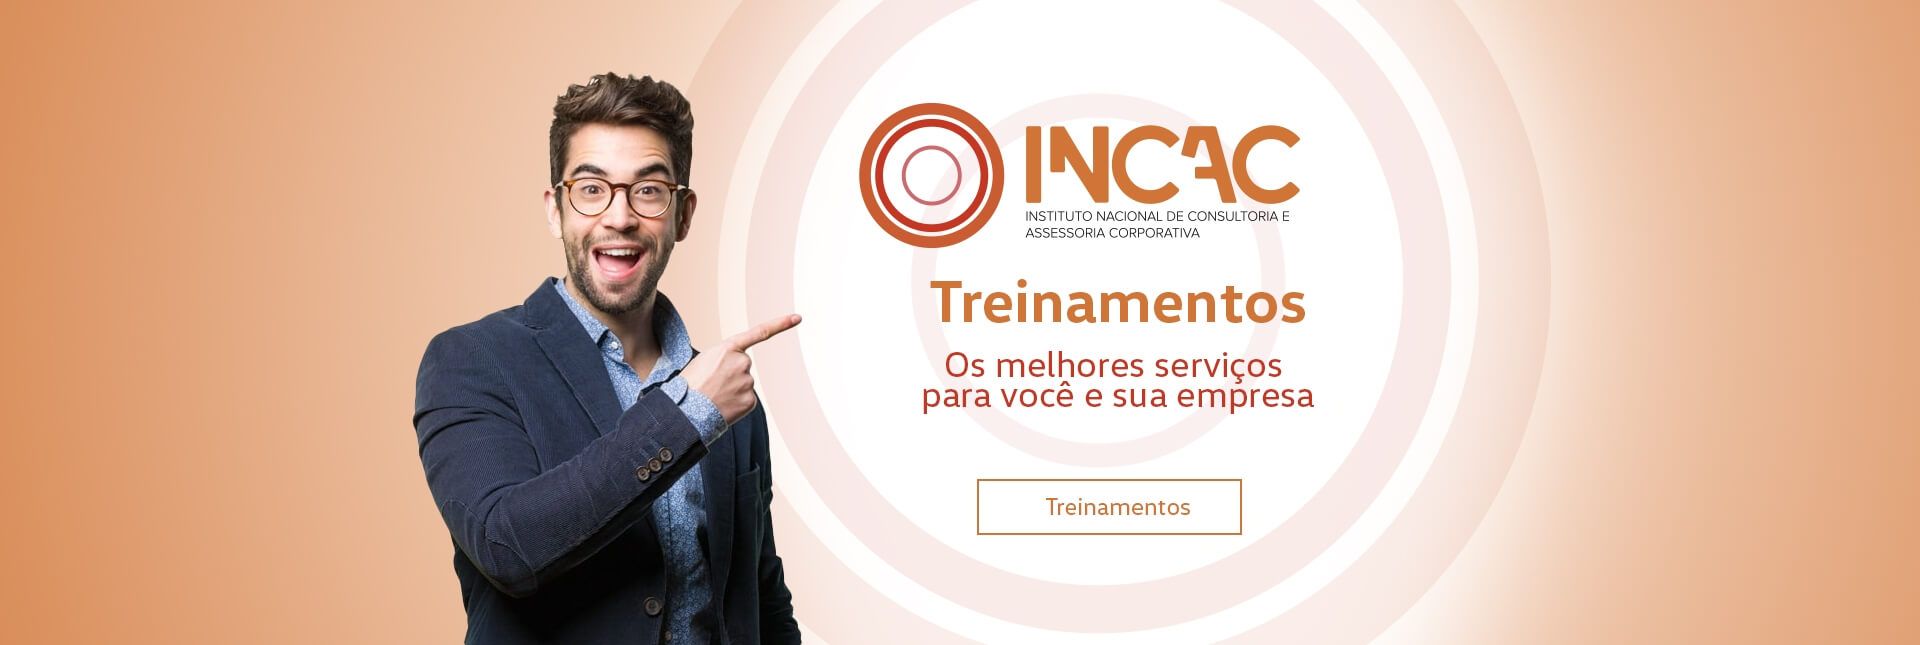 Treinamentos - INCAC  - Instituto Nacional de Consultoria e Acessoria Corporativa